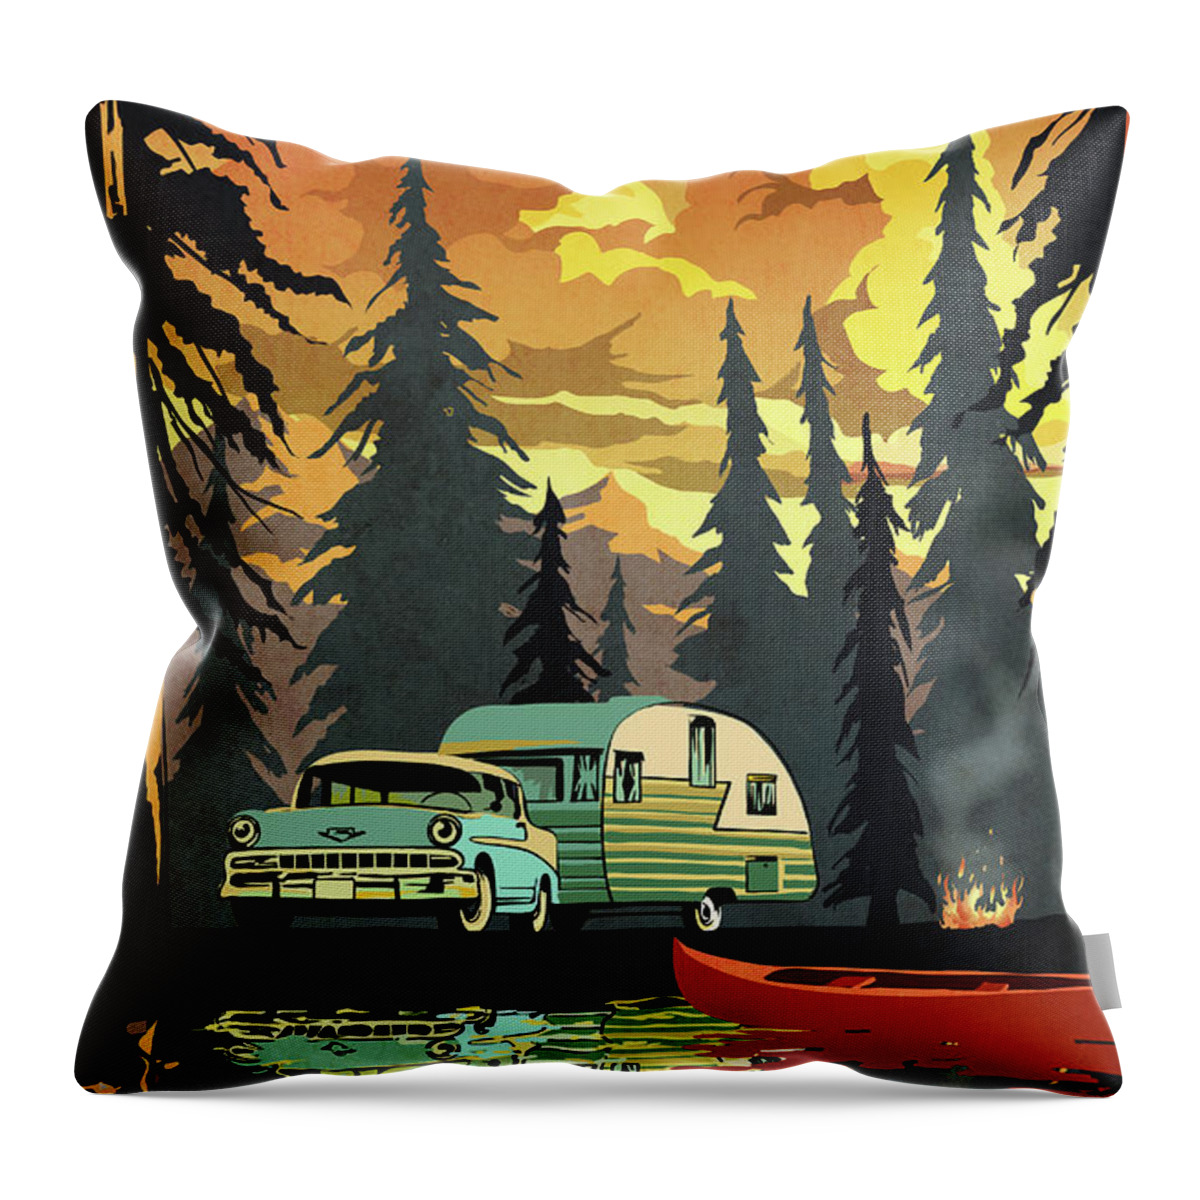 Retro Travel Art Throw Pillow featuring the digital art Vintage Shasta Camper by Sassan Filsoof